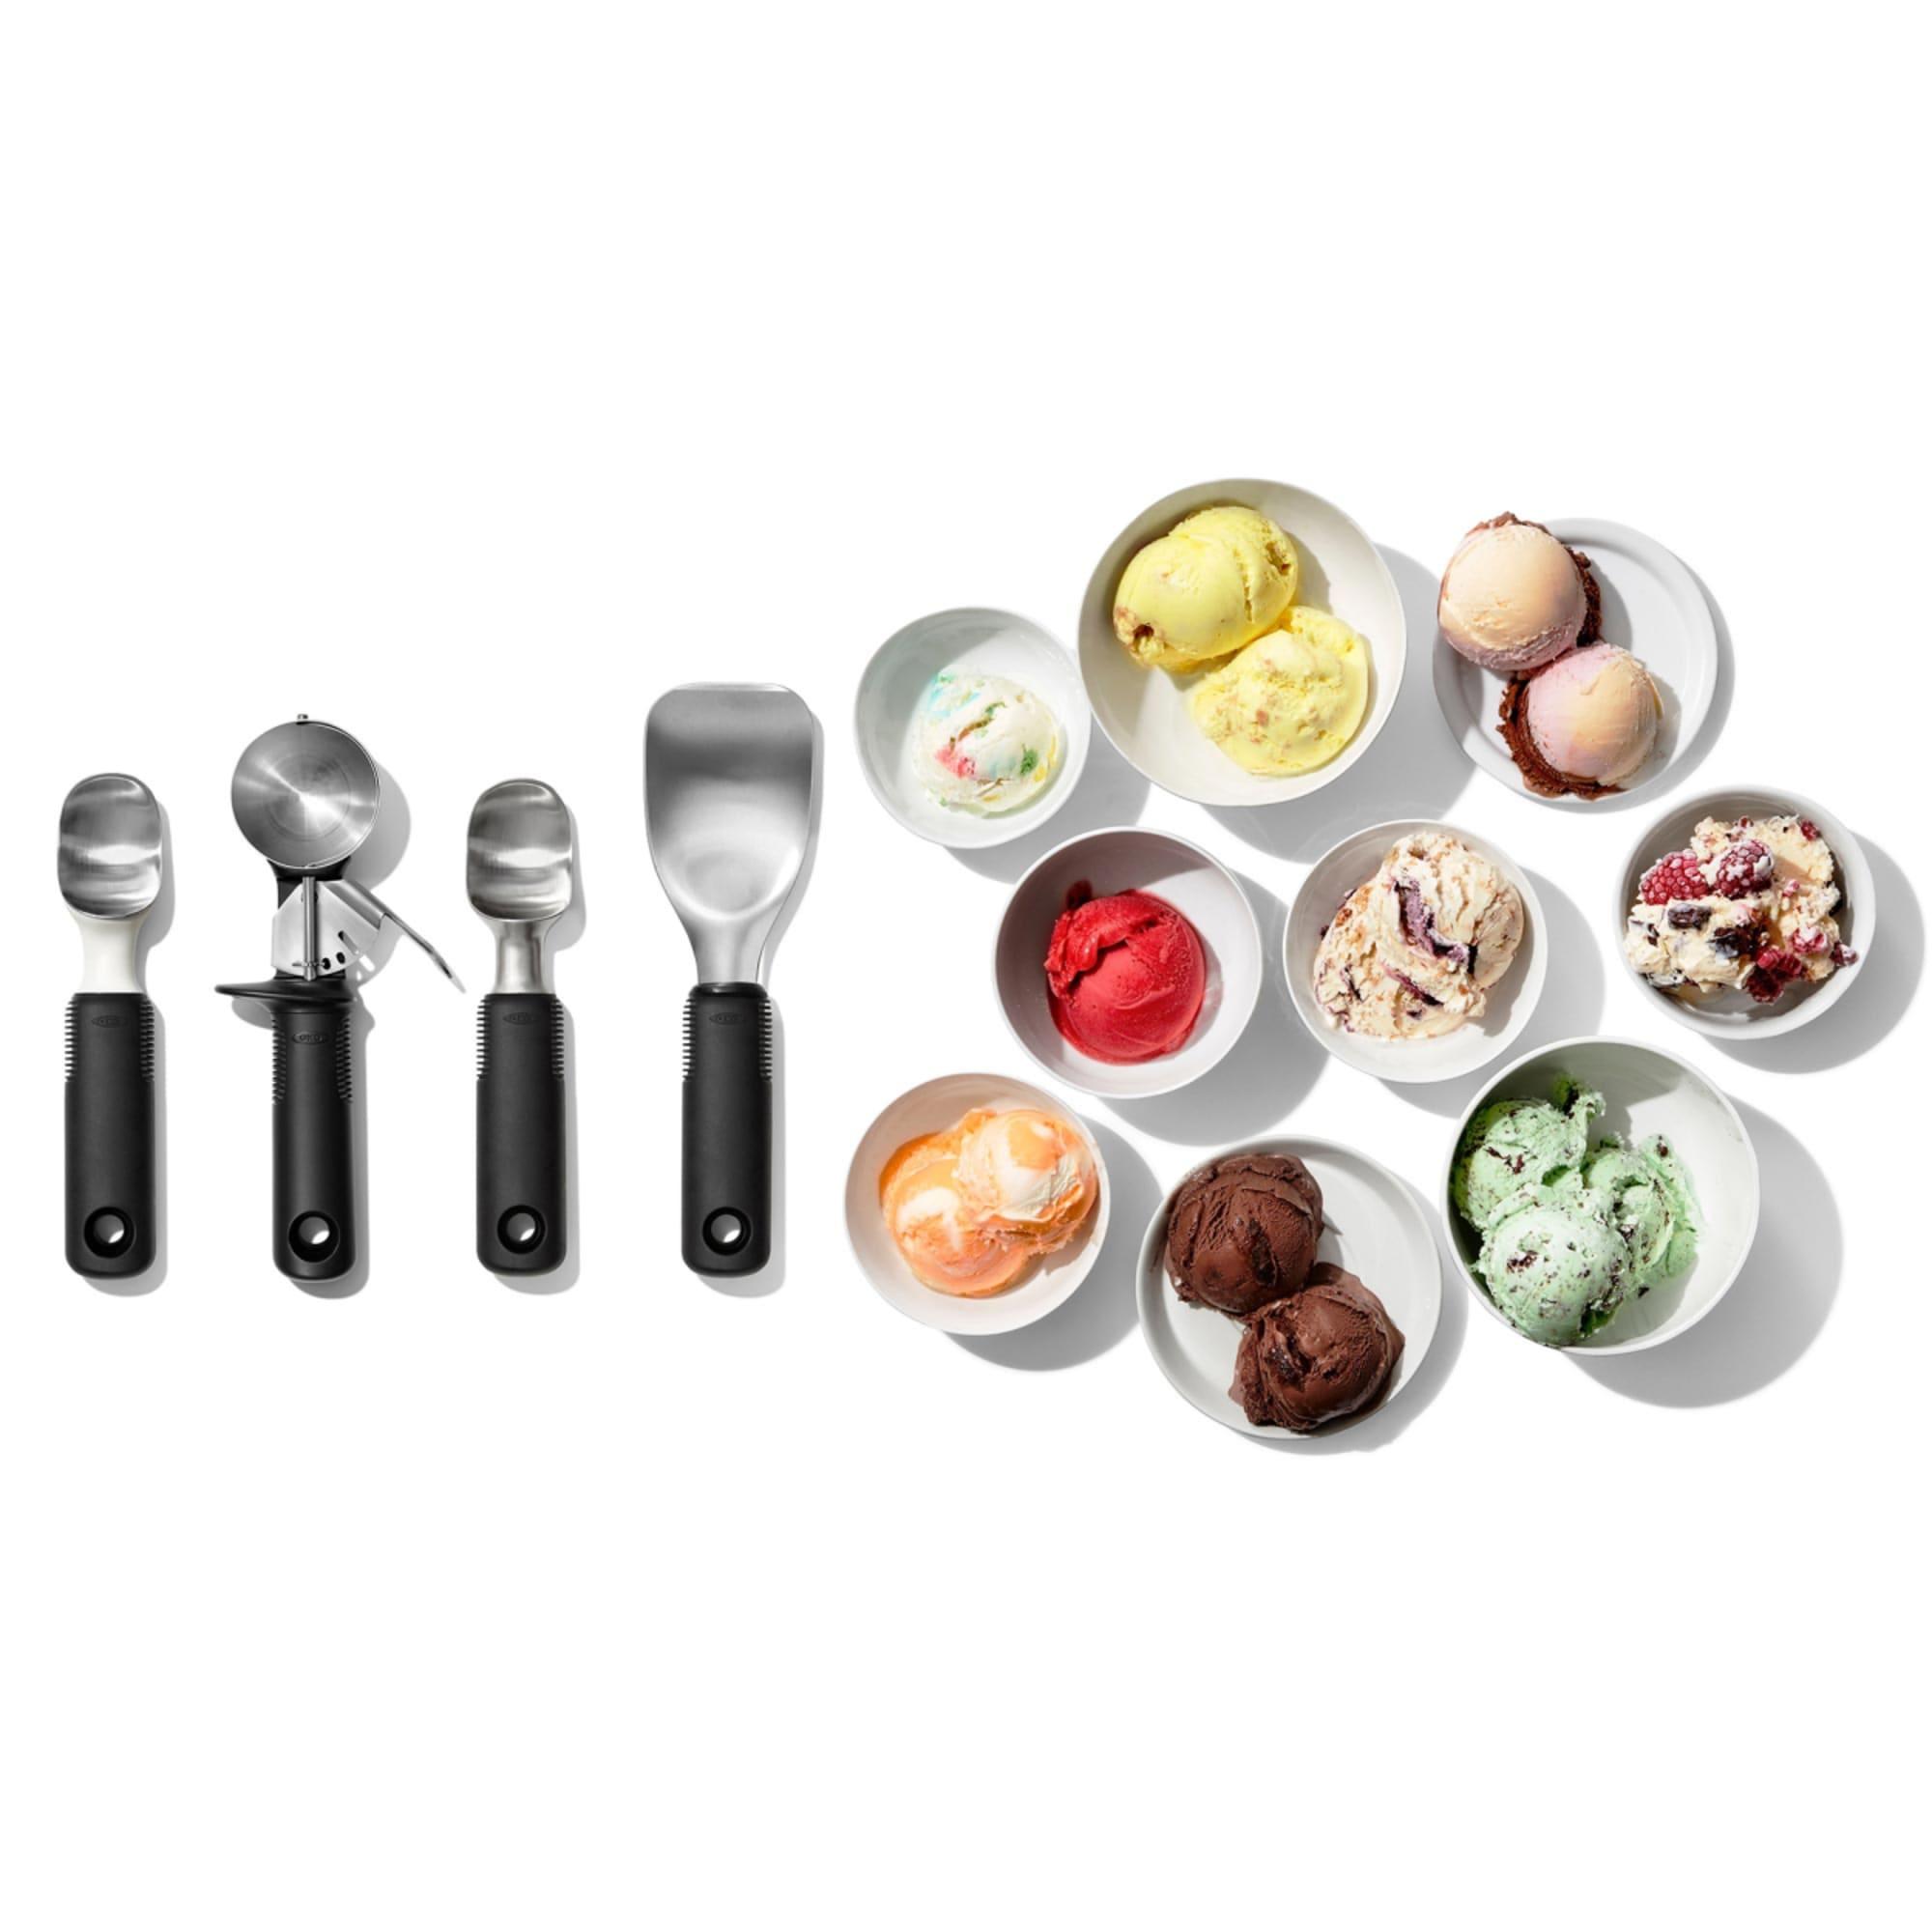 OXO Good Grips Stainless Steel Ice Cream Scoop Image 9